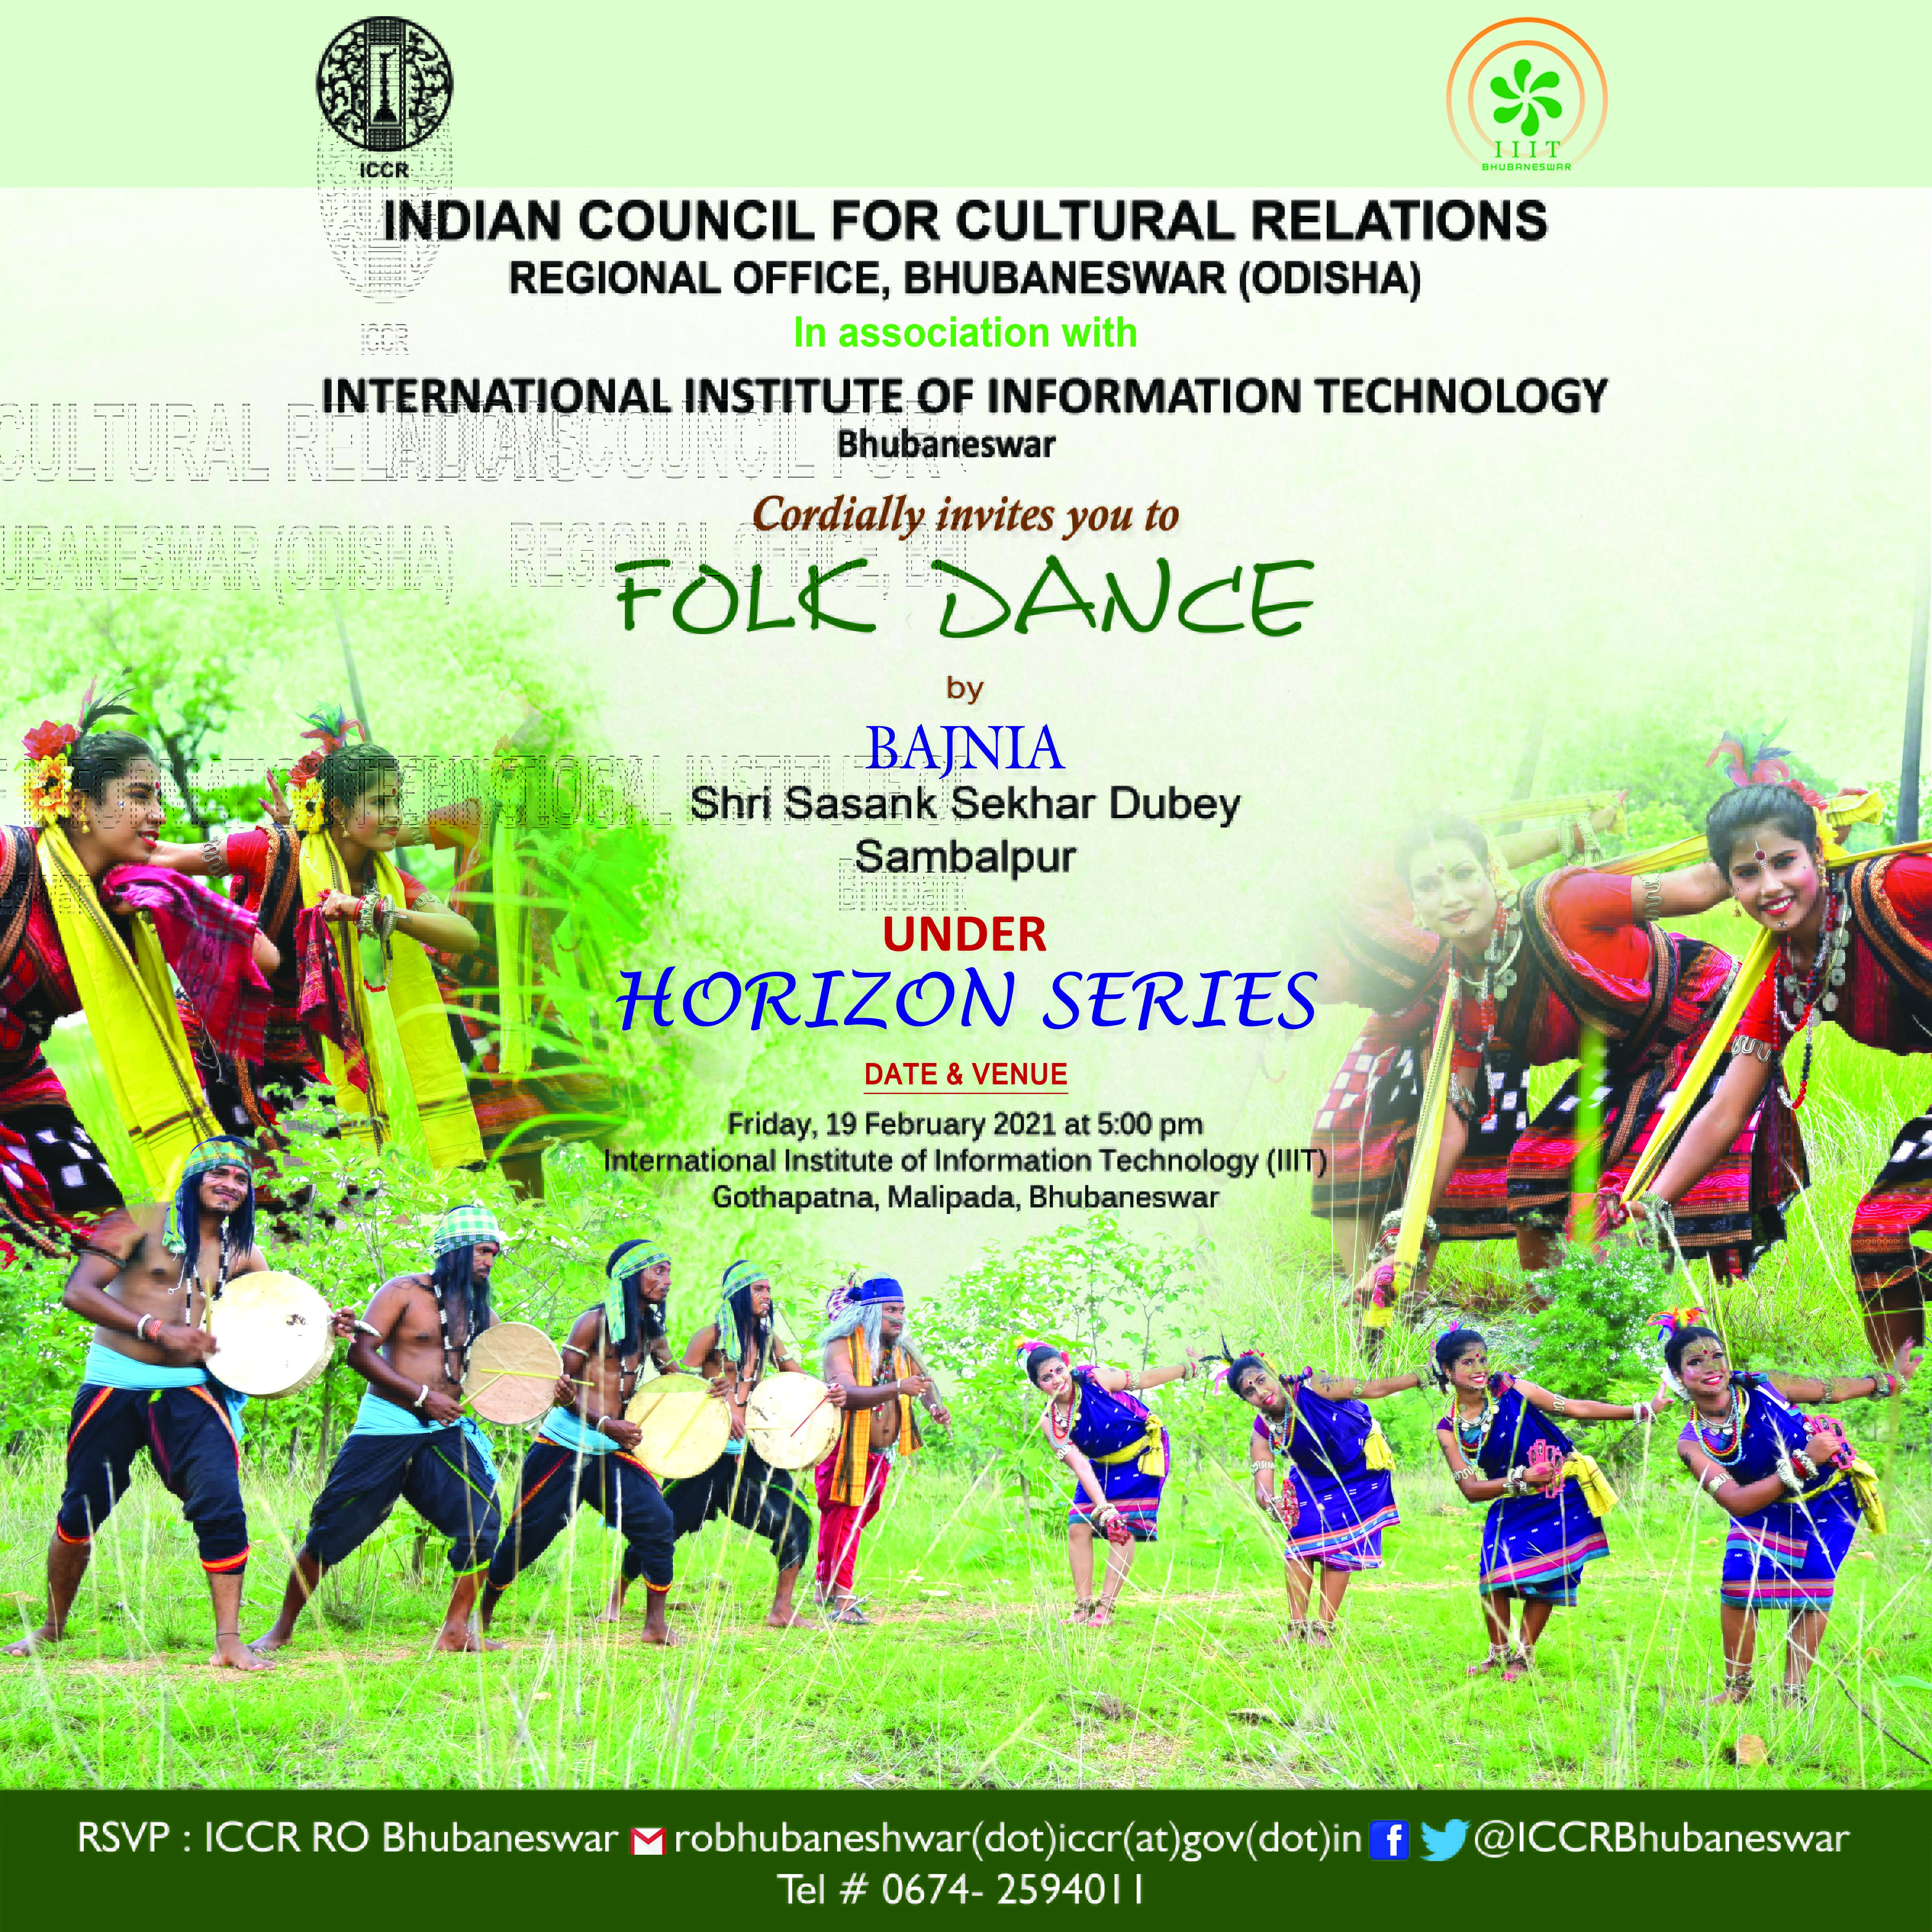 Folk Dance by BAJNIA, Shri Sasank Sekhar Dubey, Sambalpur under ICCR Horizon Series on Friday, 19th February 2021 at 5:00 pm at IIIT Bhubaneswar